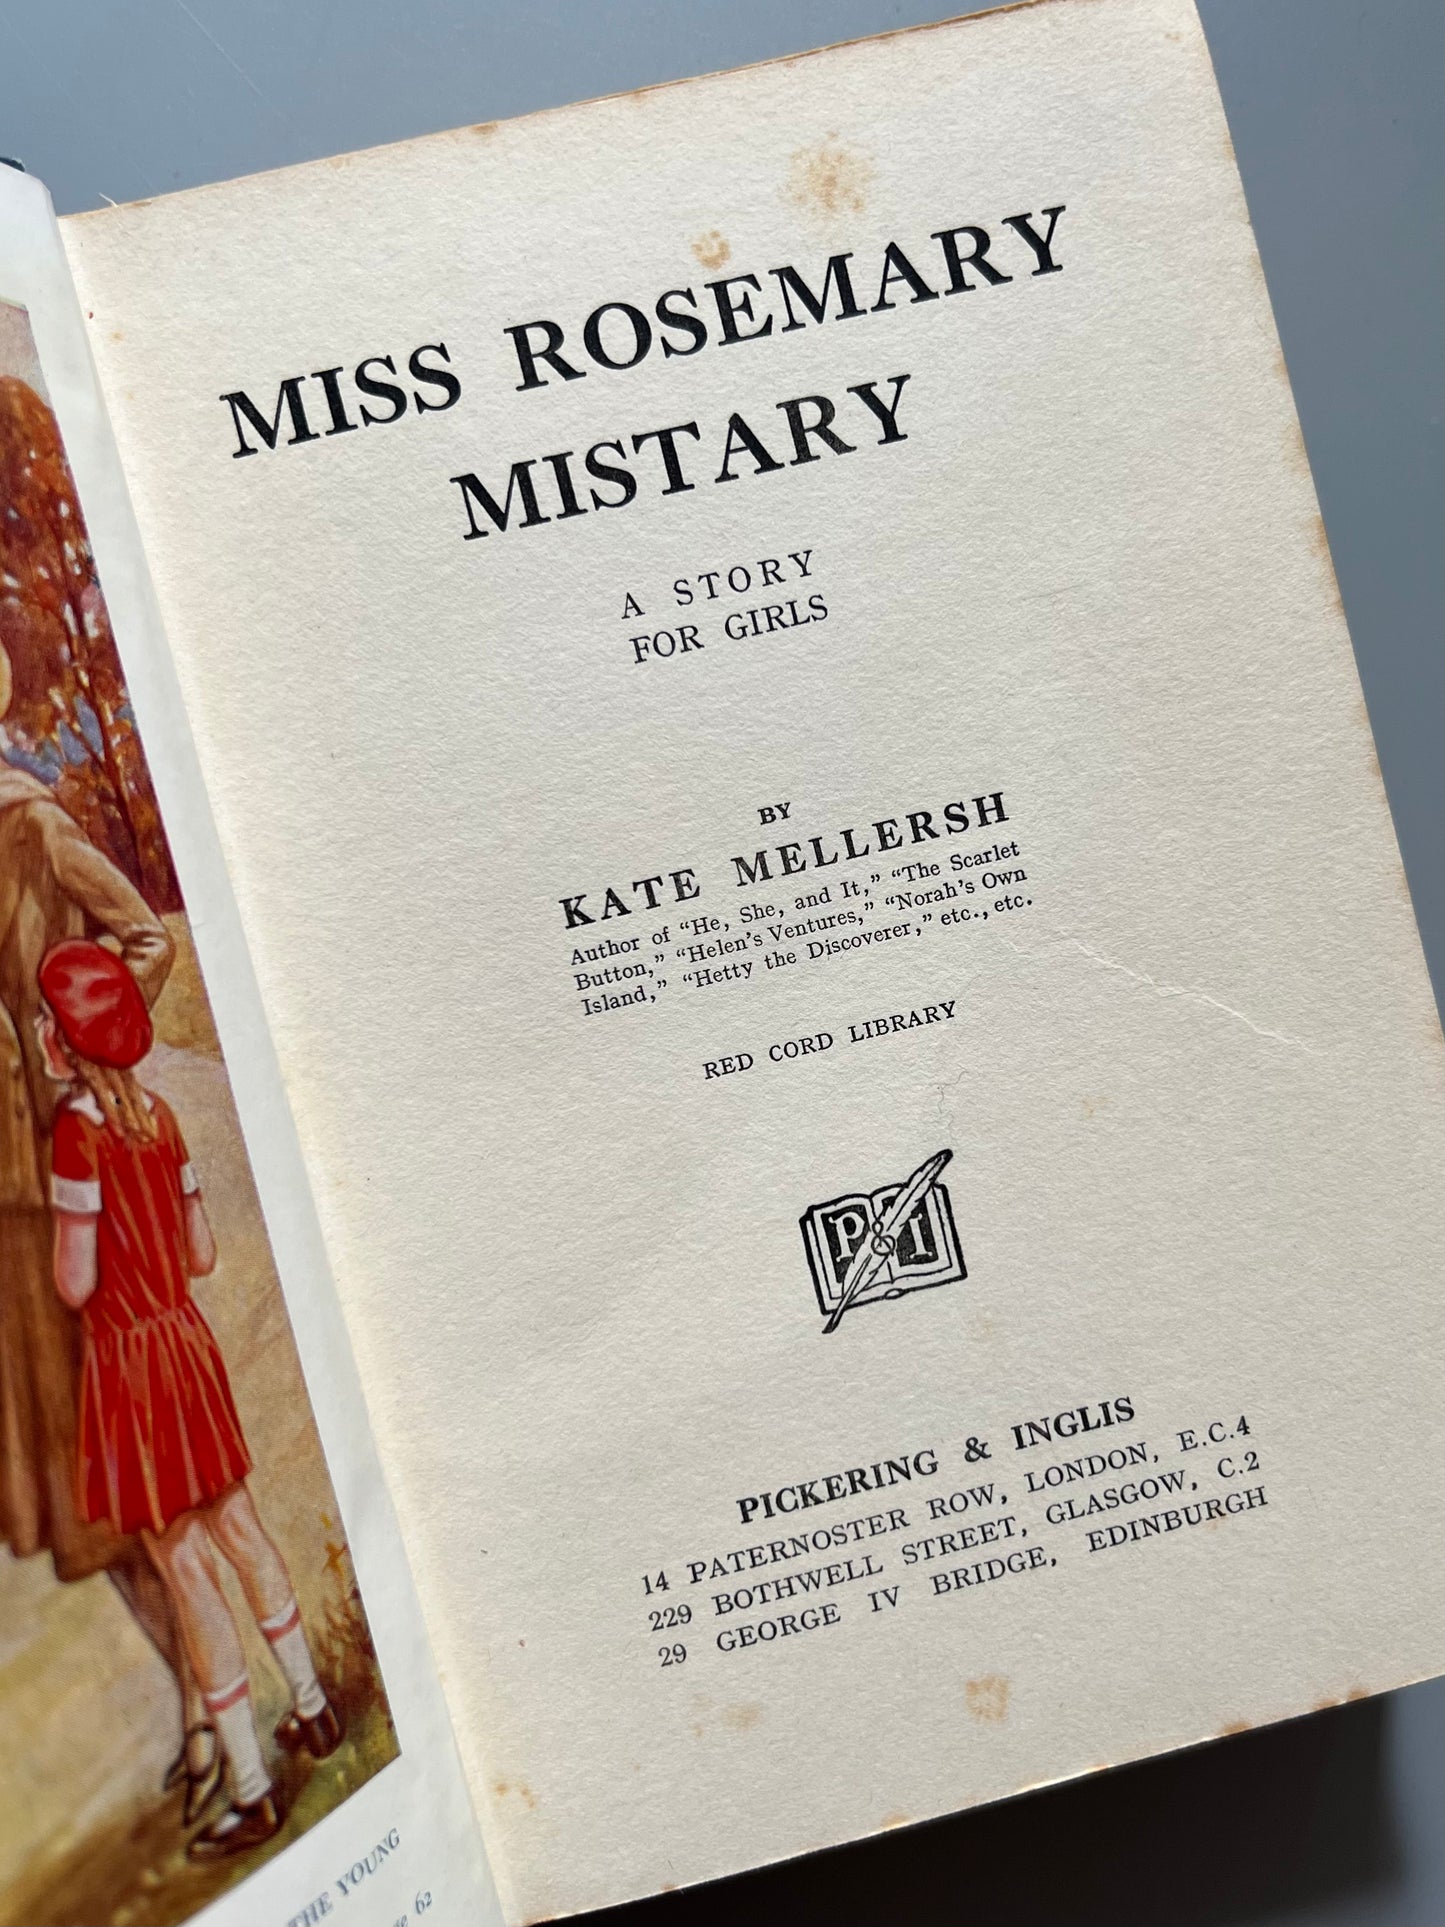 A Rosemary Mistary, Kate Mellersh - Pickering & Inglis, ca. 1920